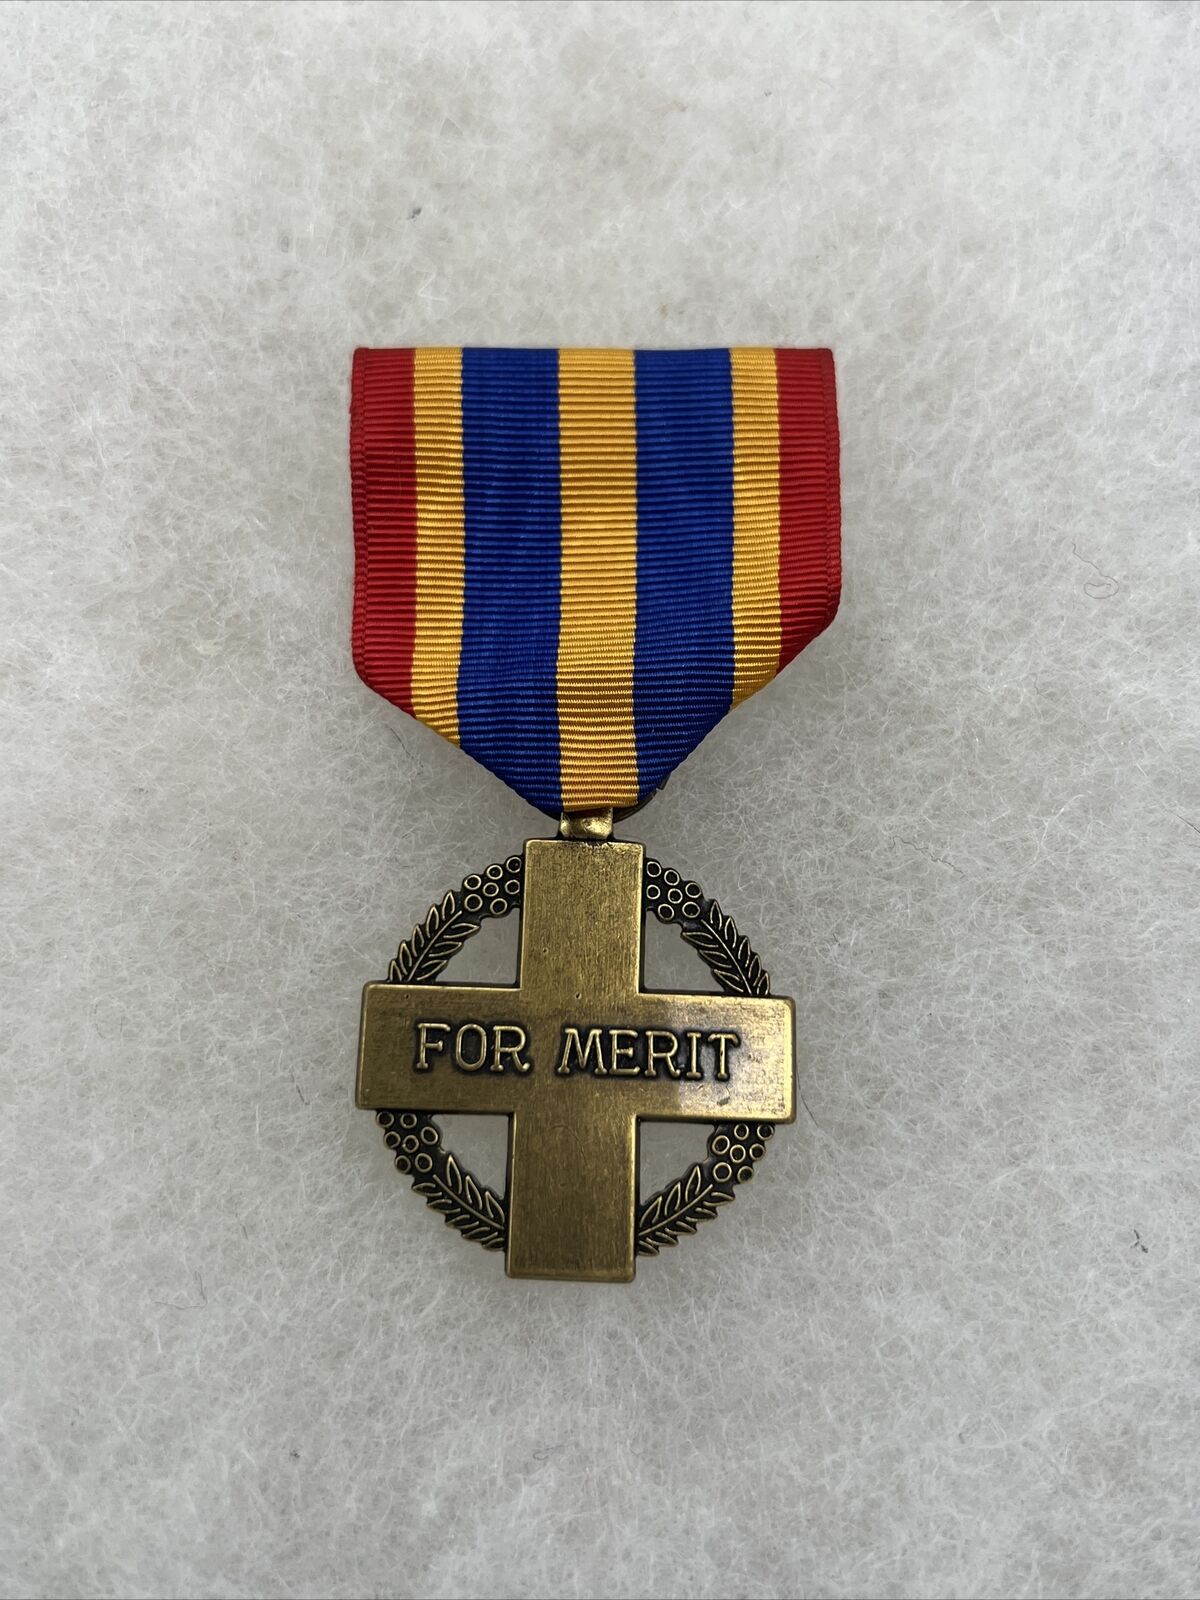 California National Guard Meritorious Service Medal (m286